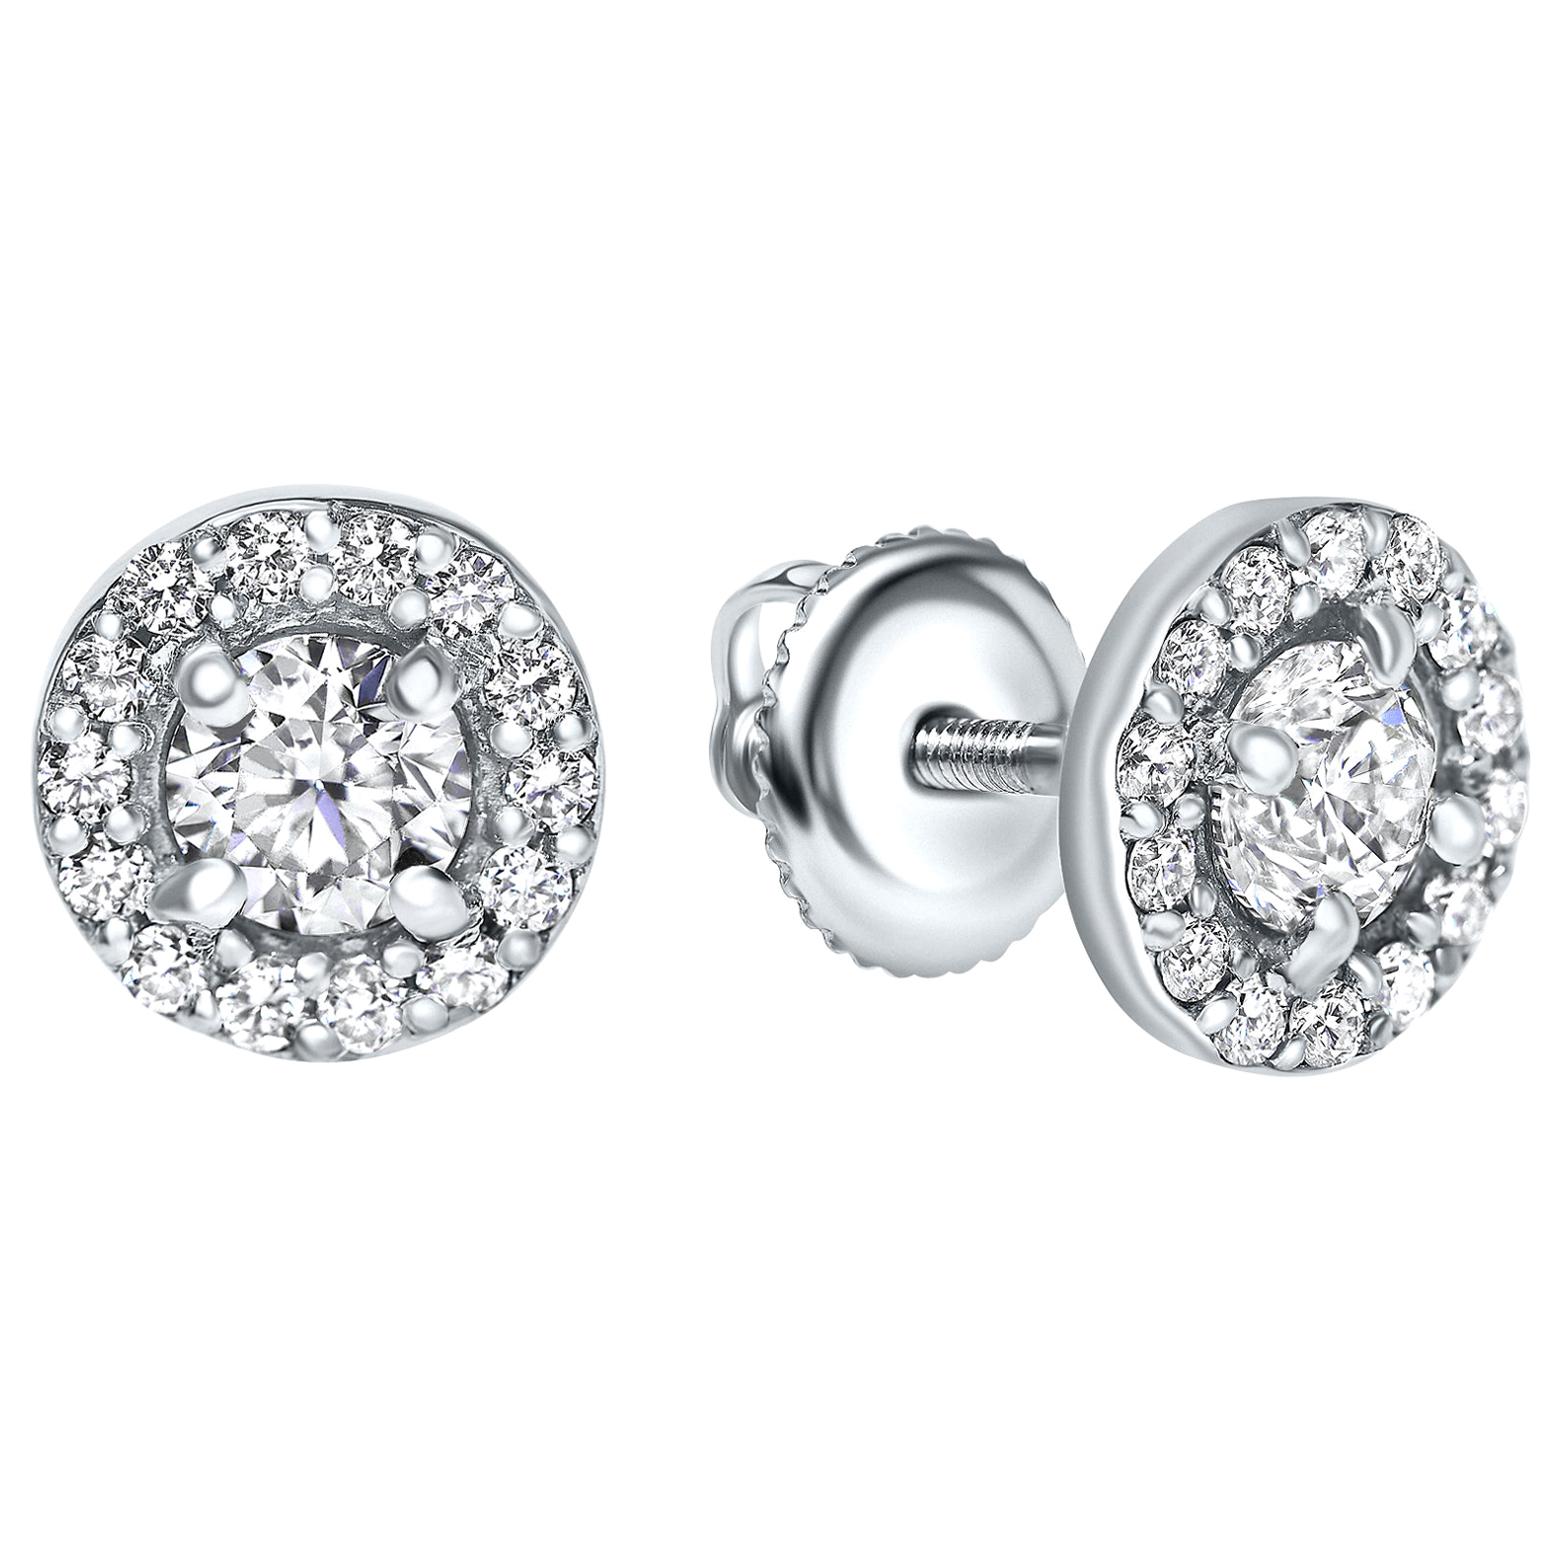 0.84 Carat Diamond Large Halo Earrings in 14 Karat White Gold - Shlomit Rogel For Sale